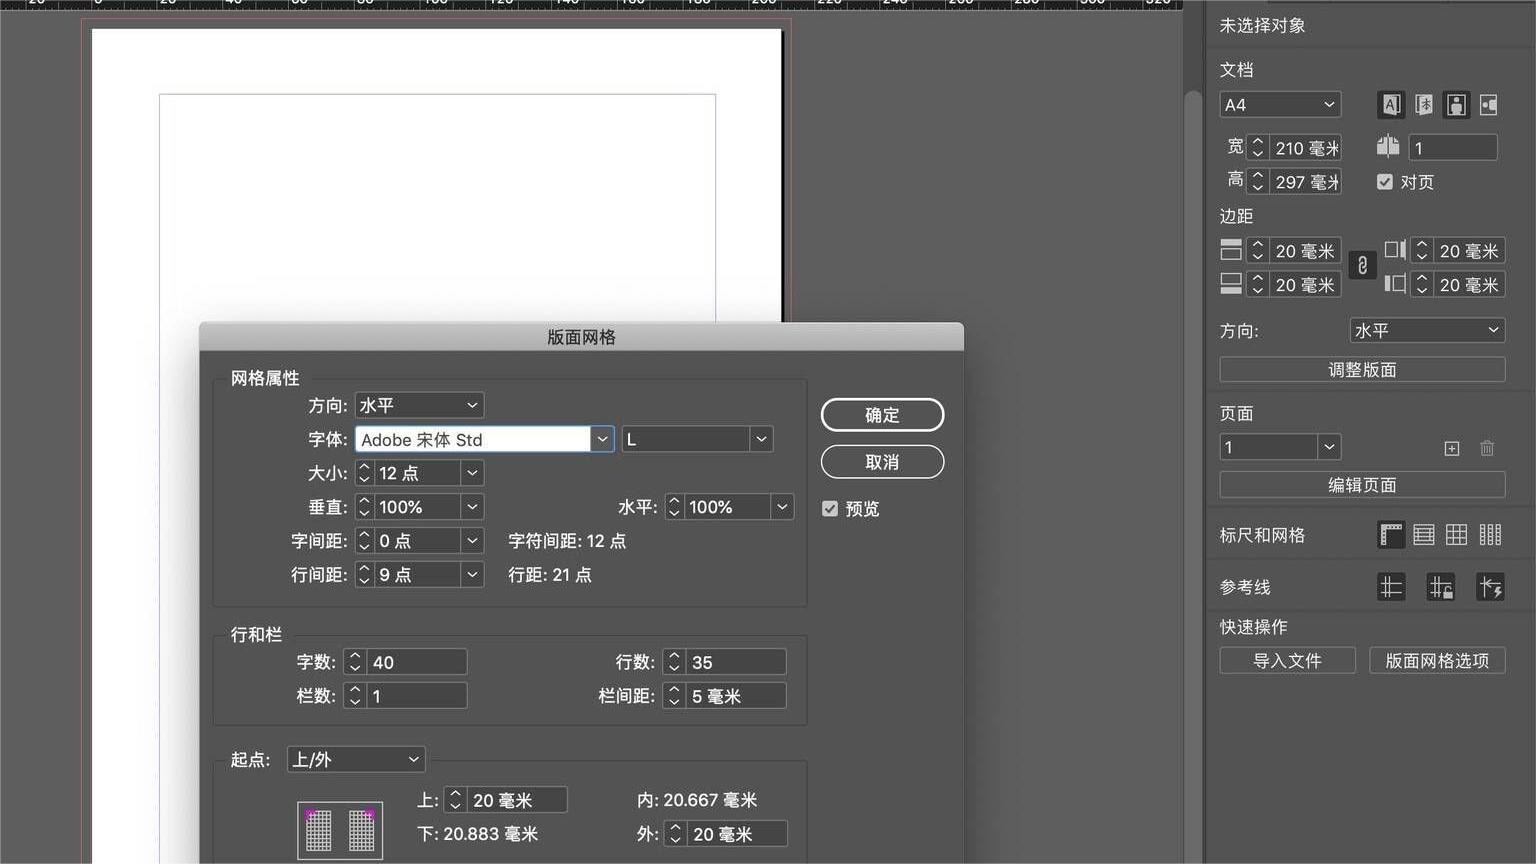 Adobe InDesign CC 2019 Mac绿色版 14.0 精简版